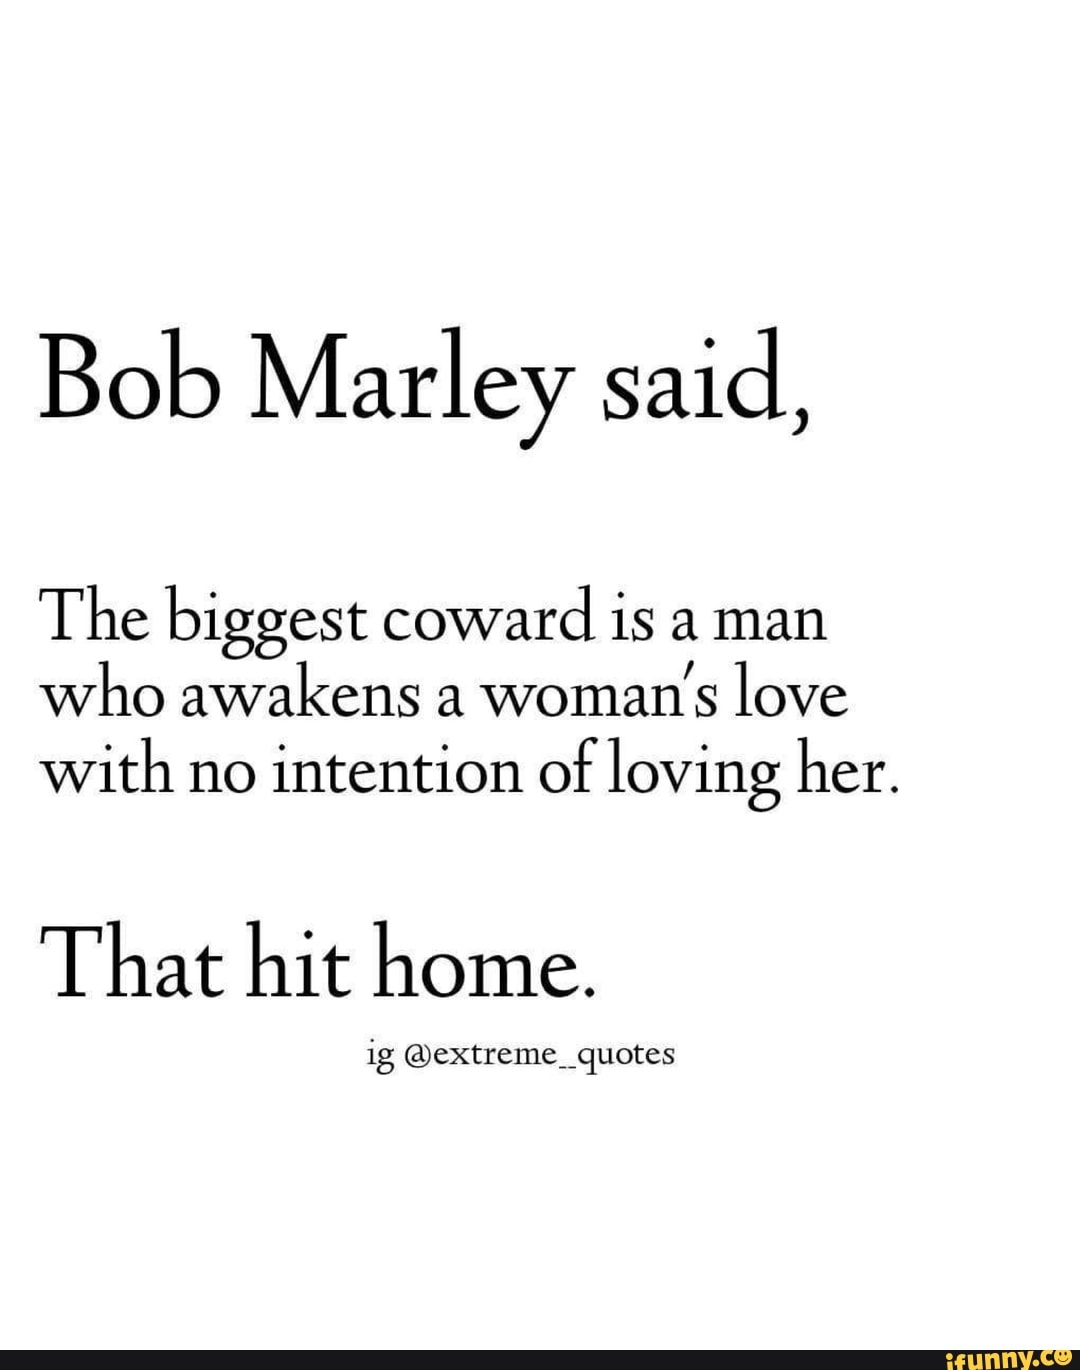 The biggest coward bob marley